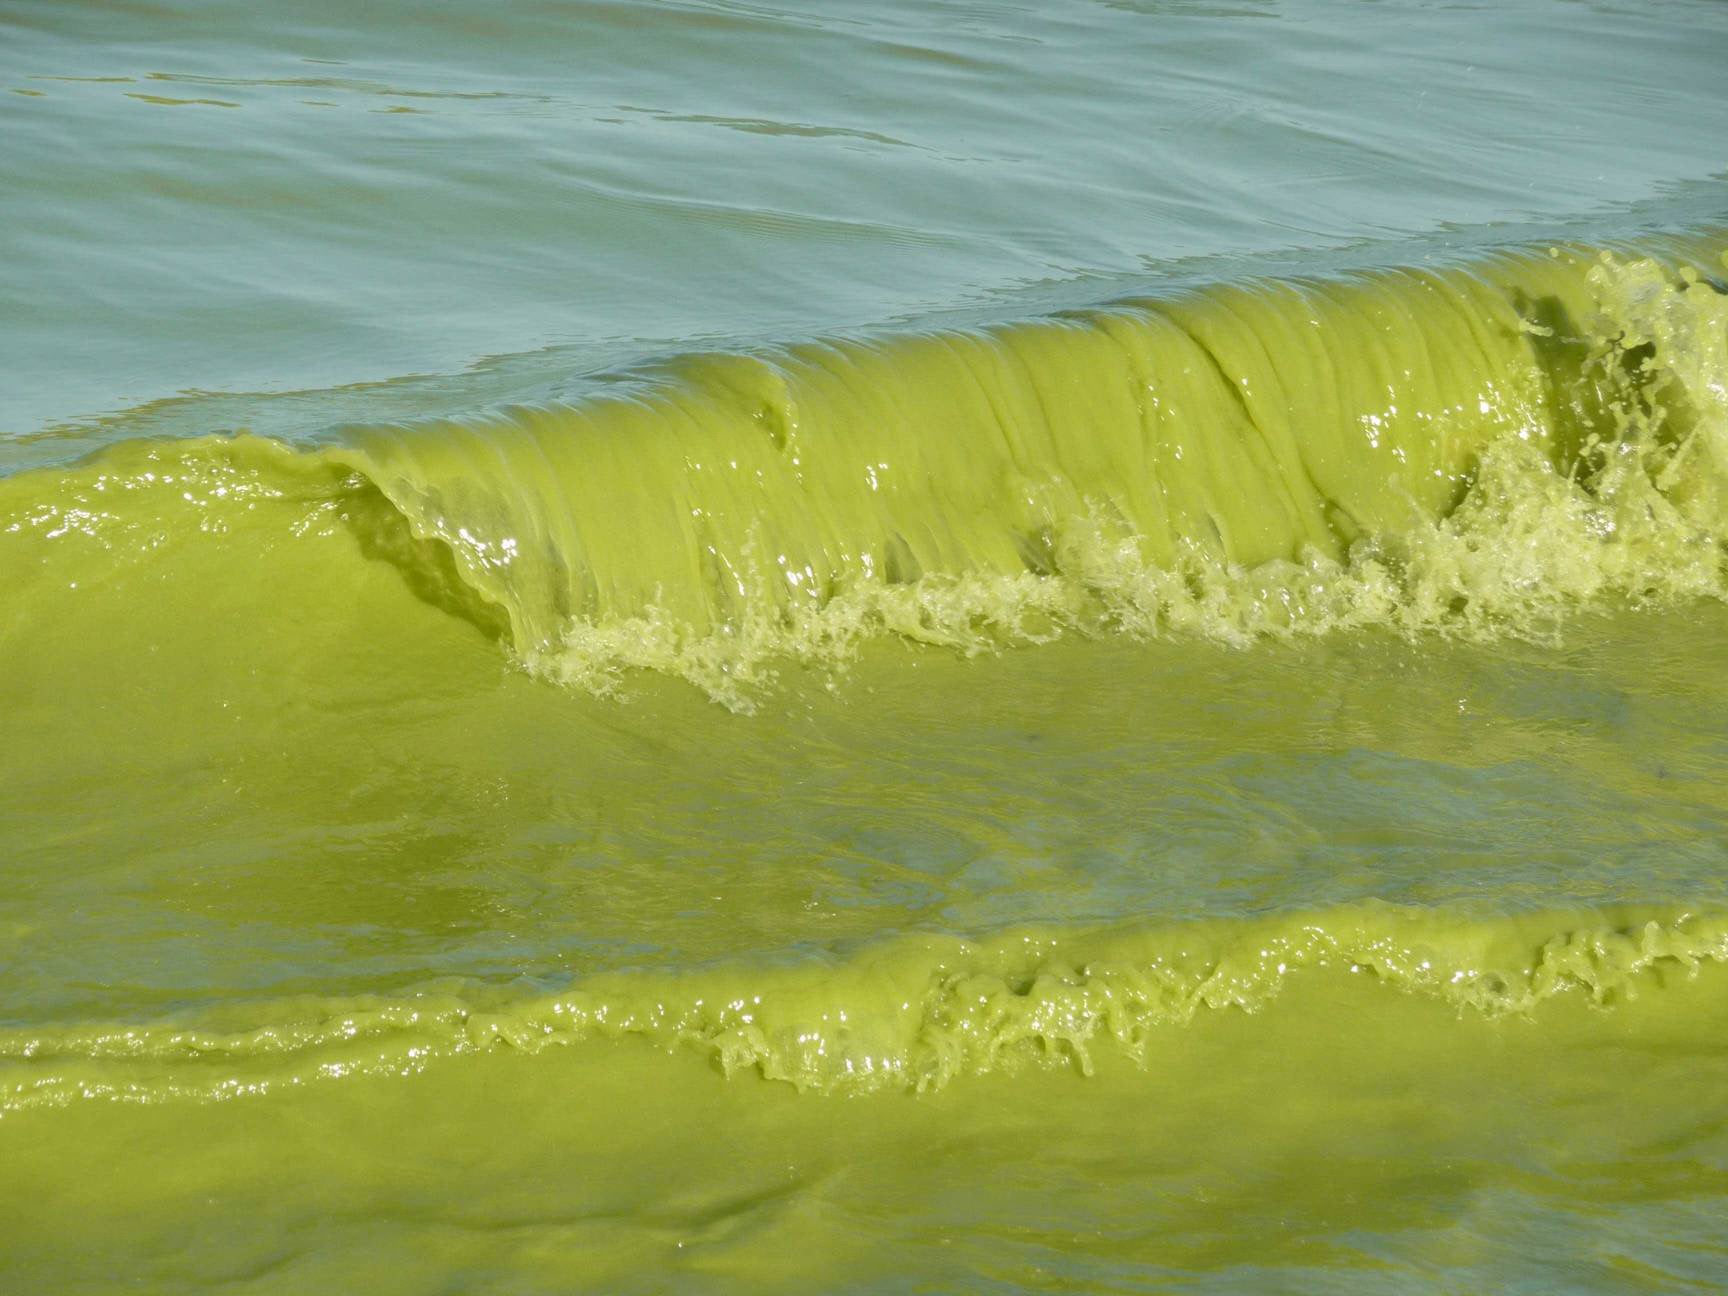 Toxic algae sludge